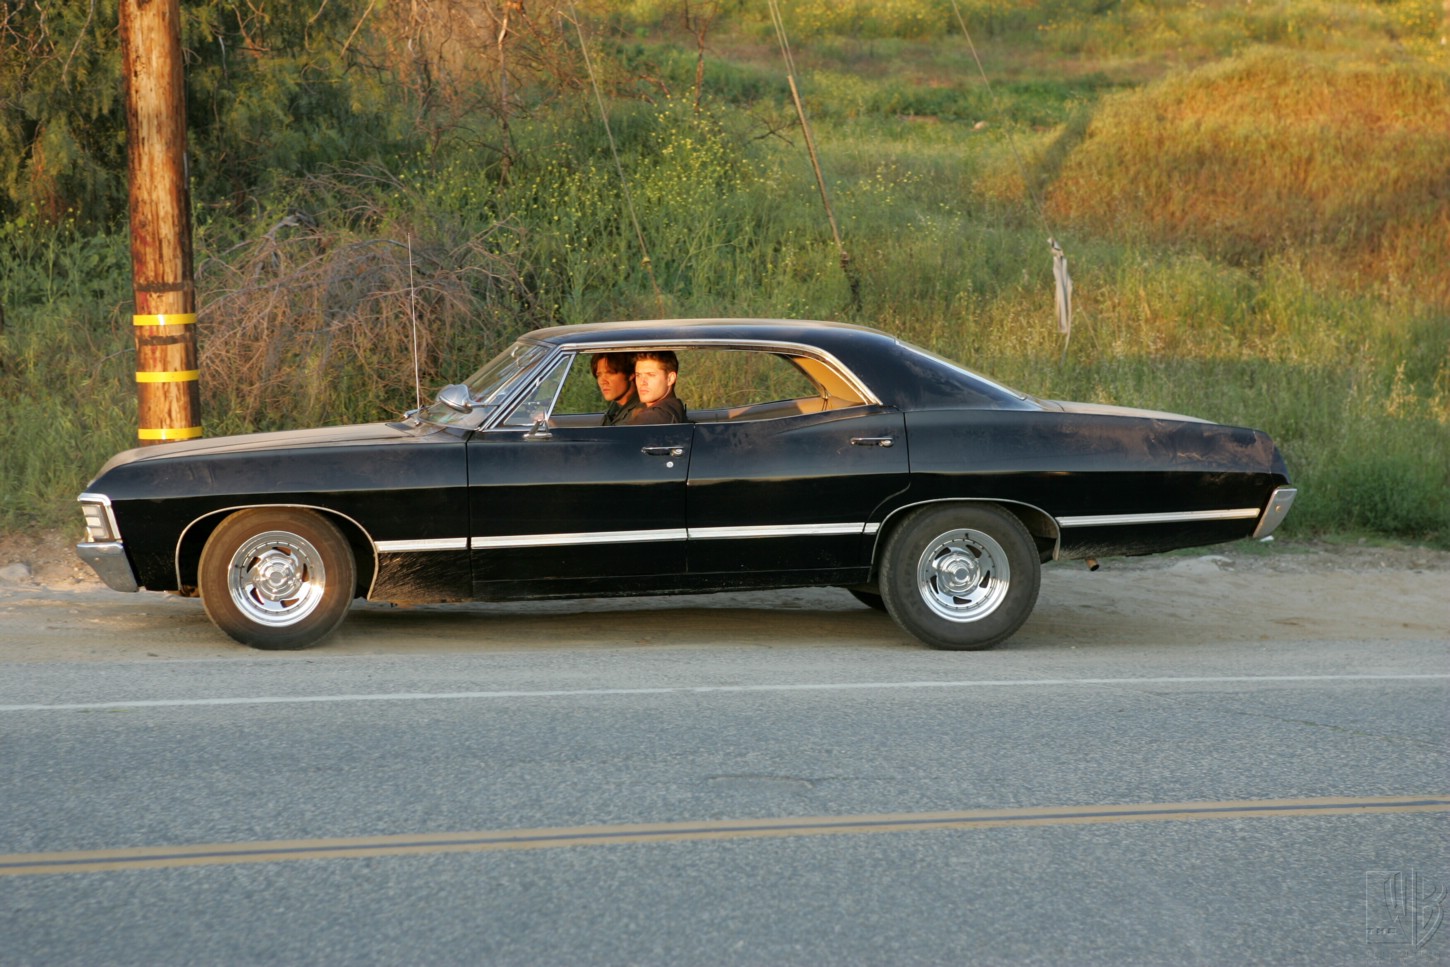 1967 Chevy Impala Supernatural, chevrolet impala 1967 hd wallpaper